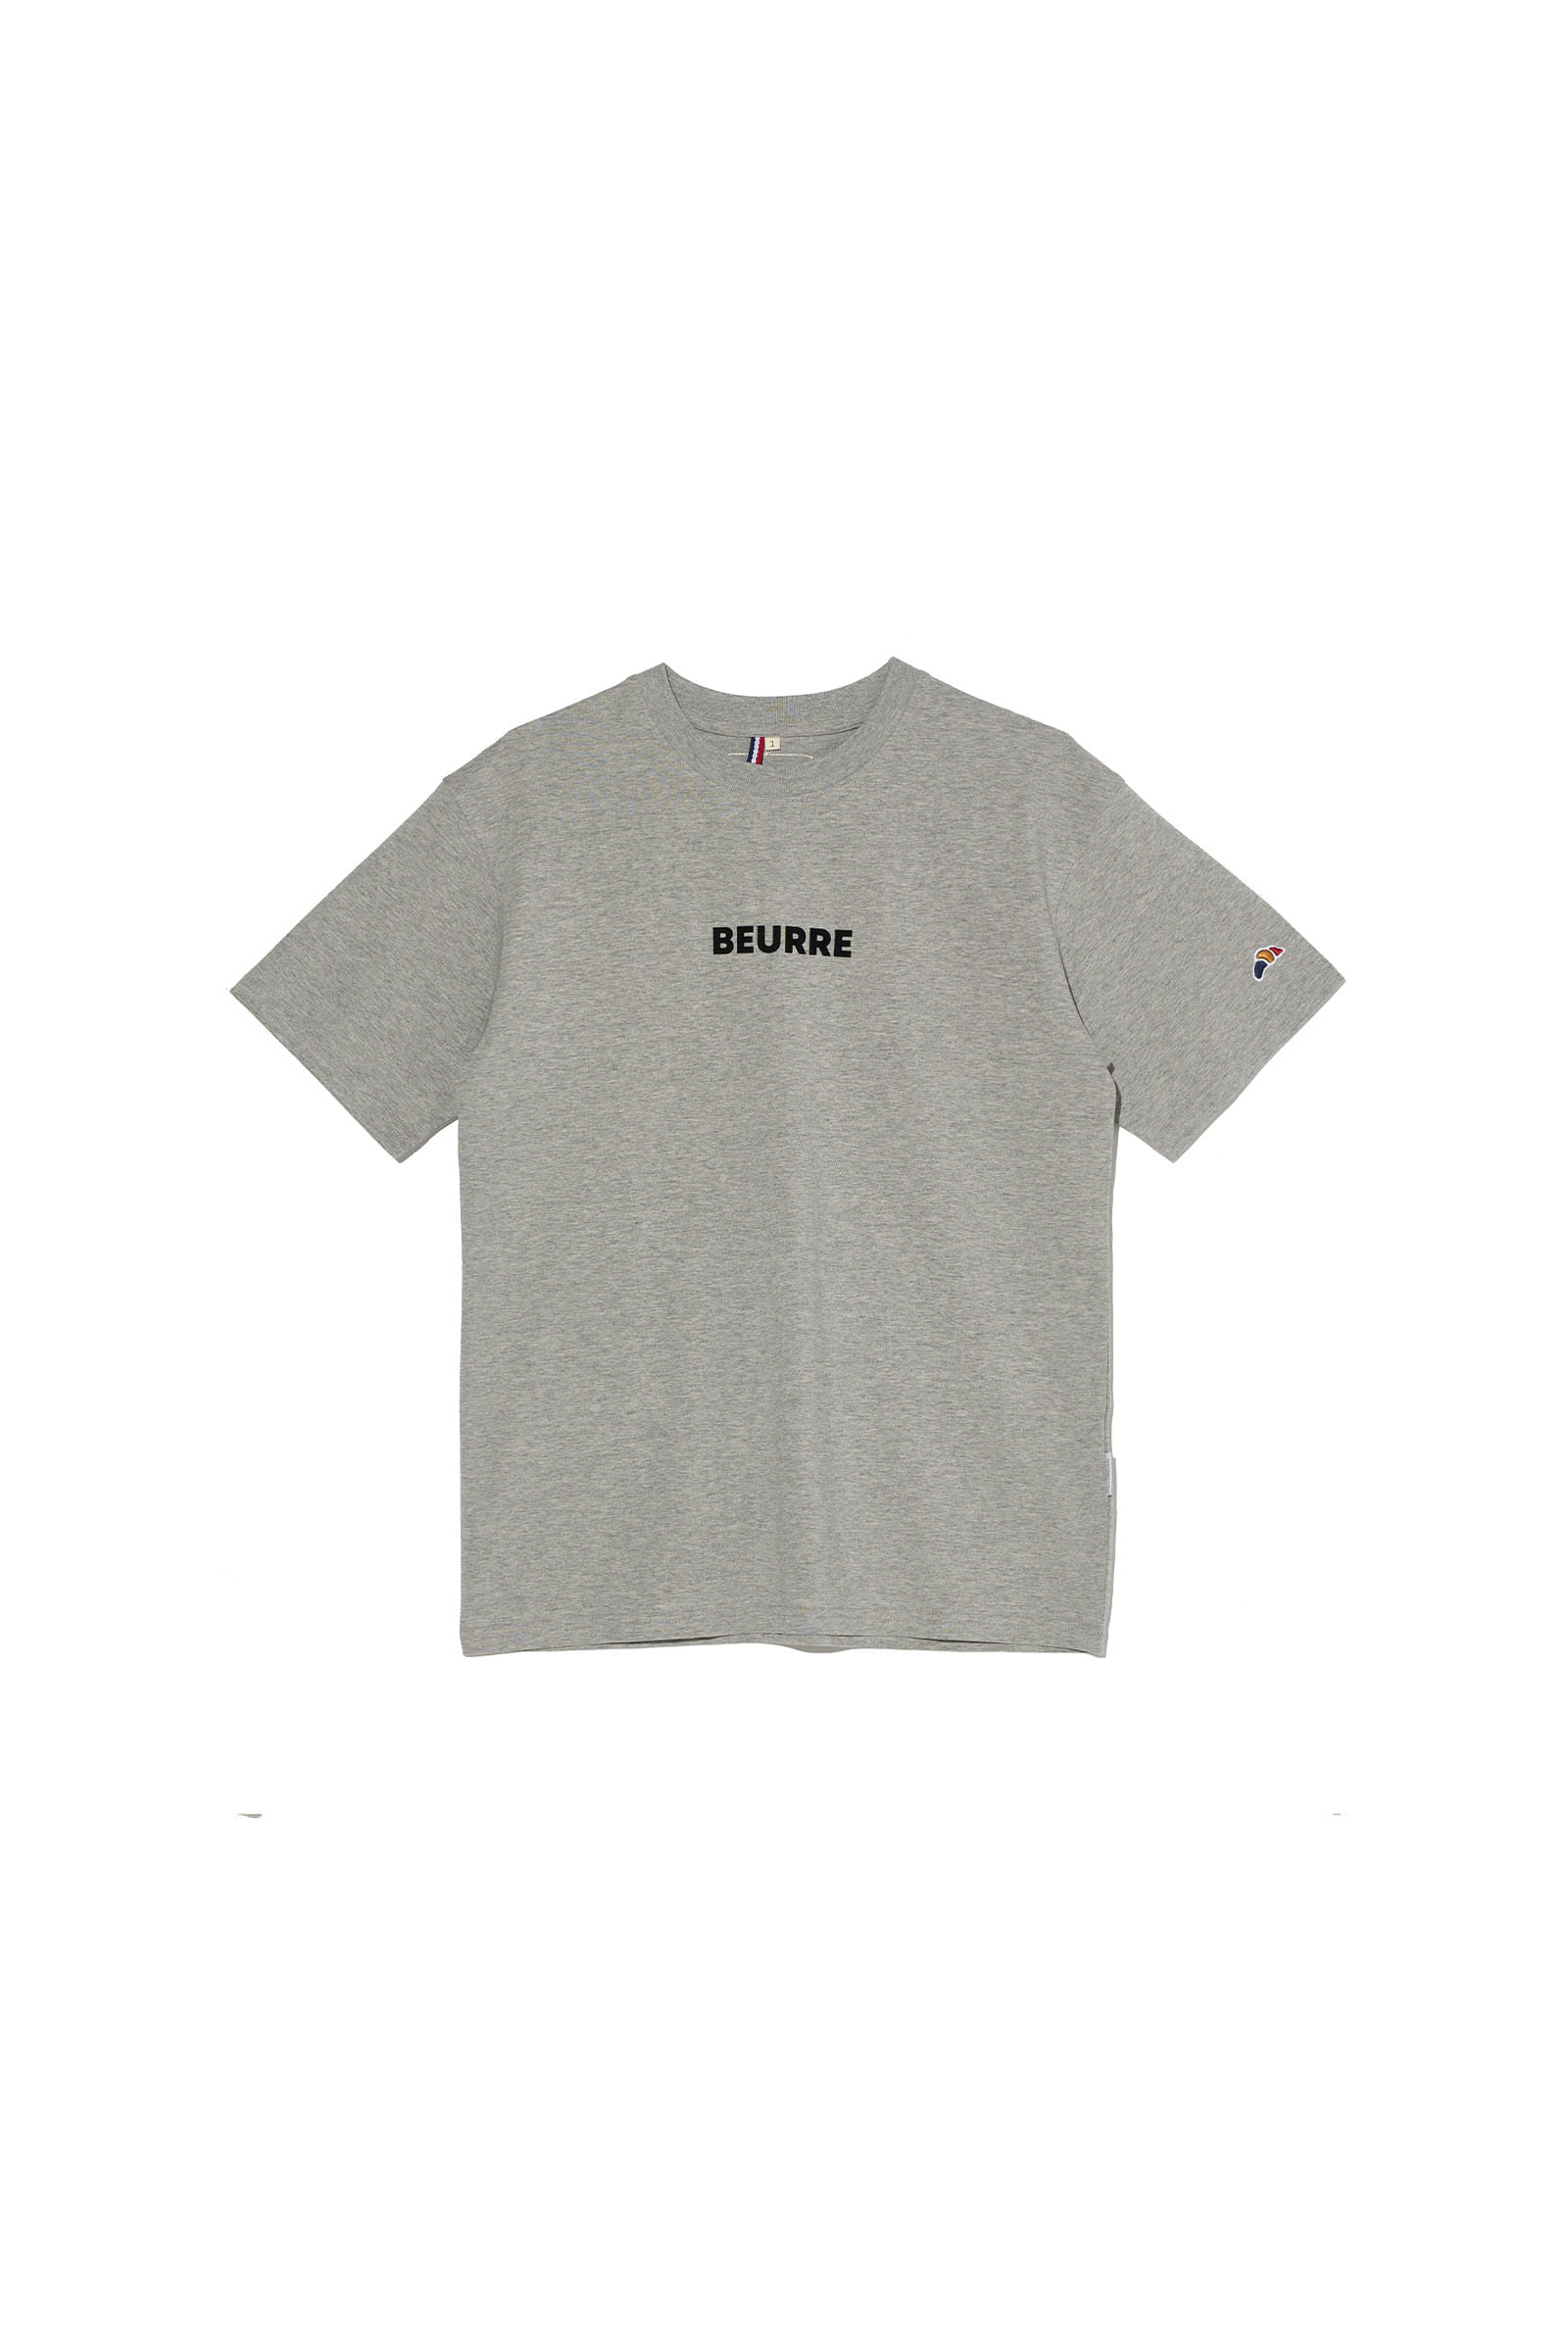 ep.6 BEURRE Mini T-shirts (Gray)